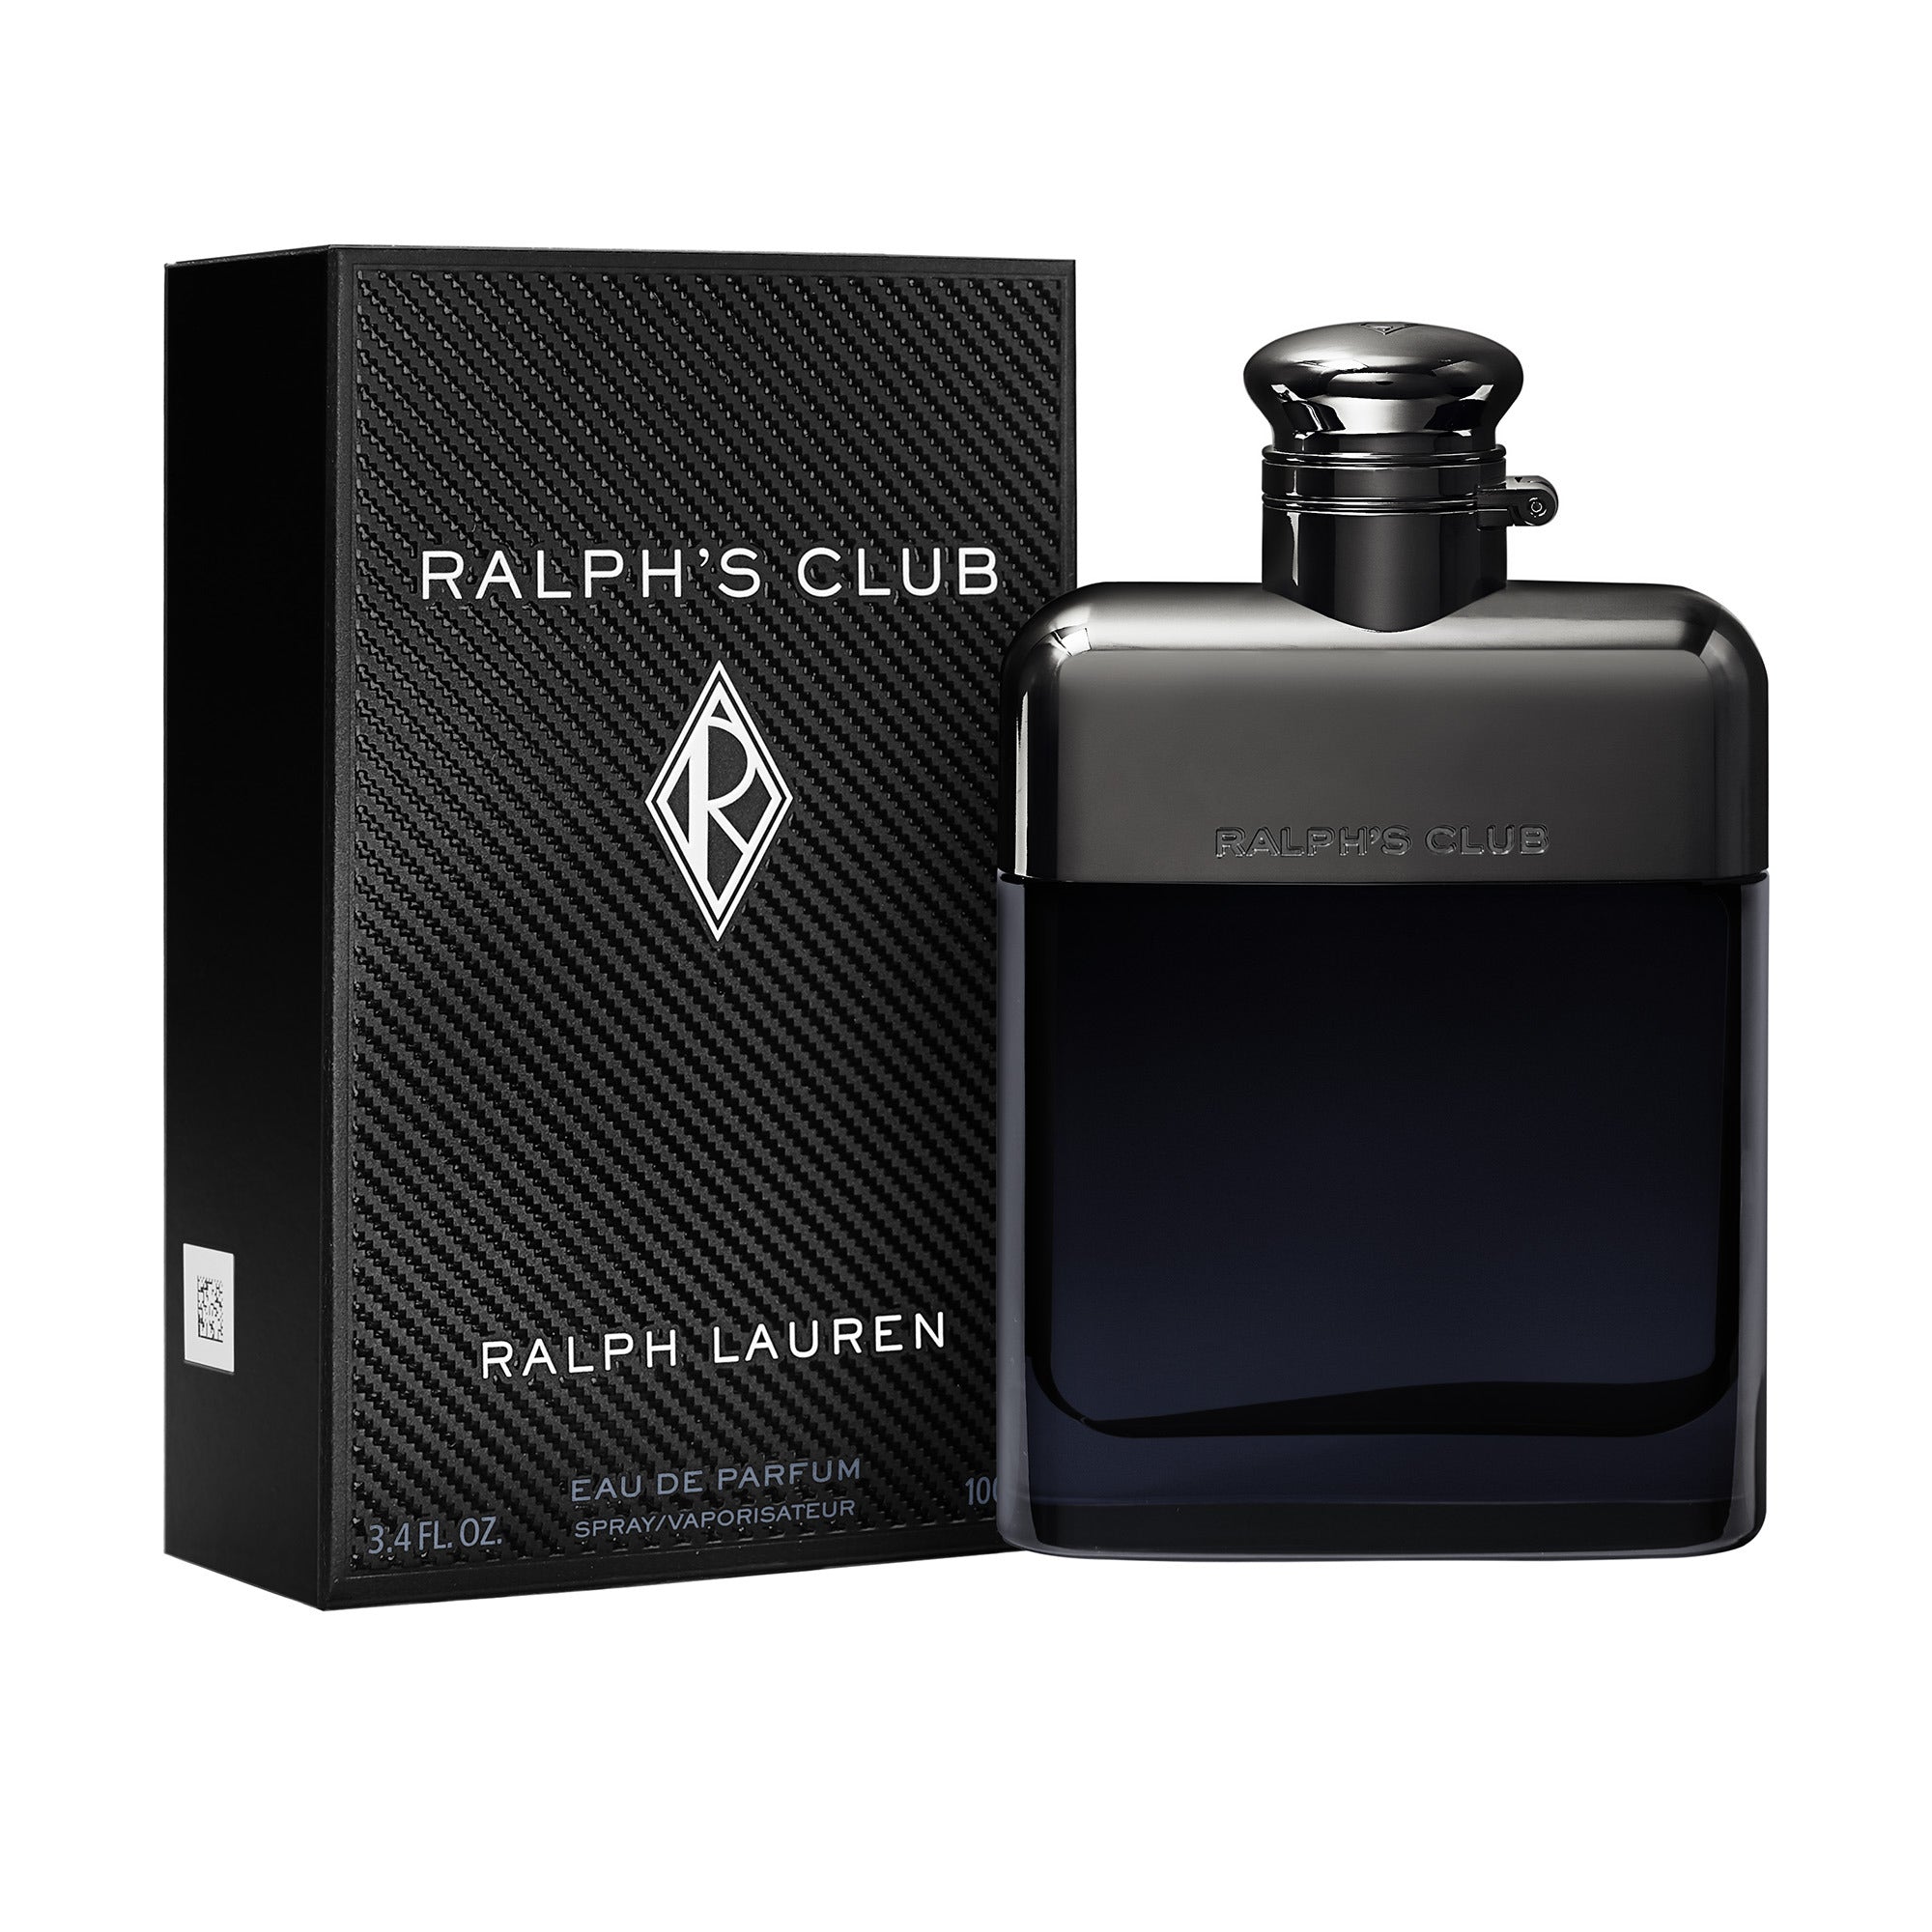 Ralph Lauren Ralph's Club M edp